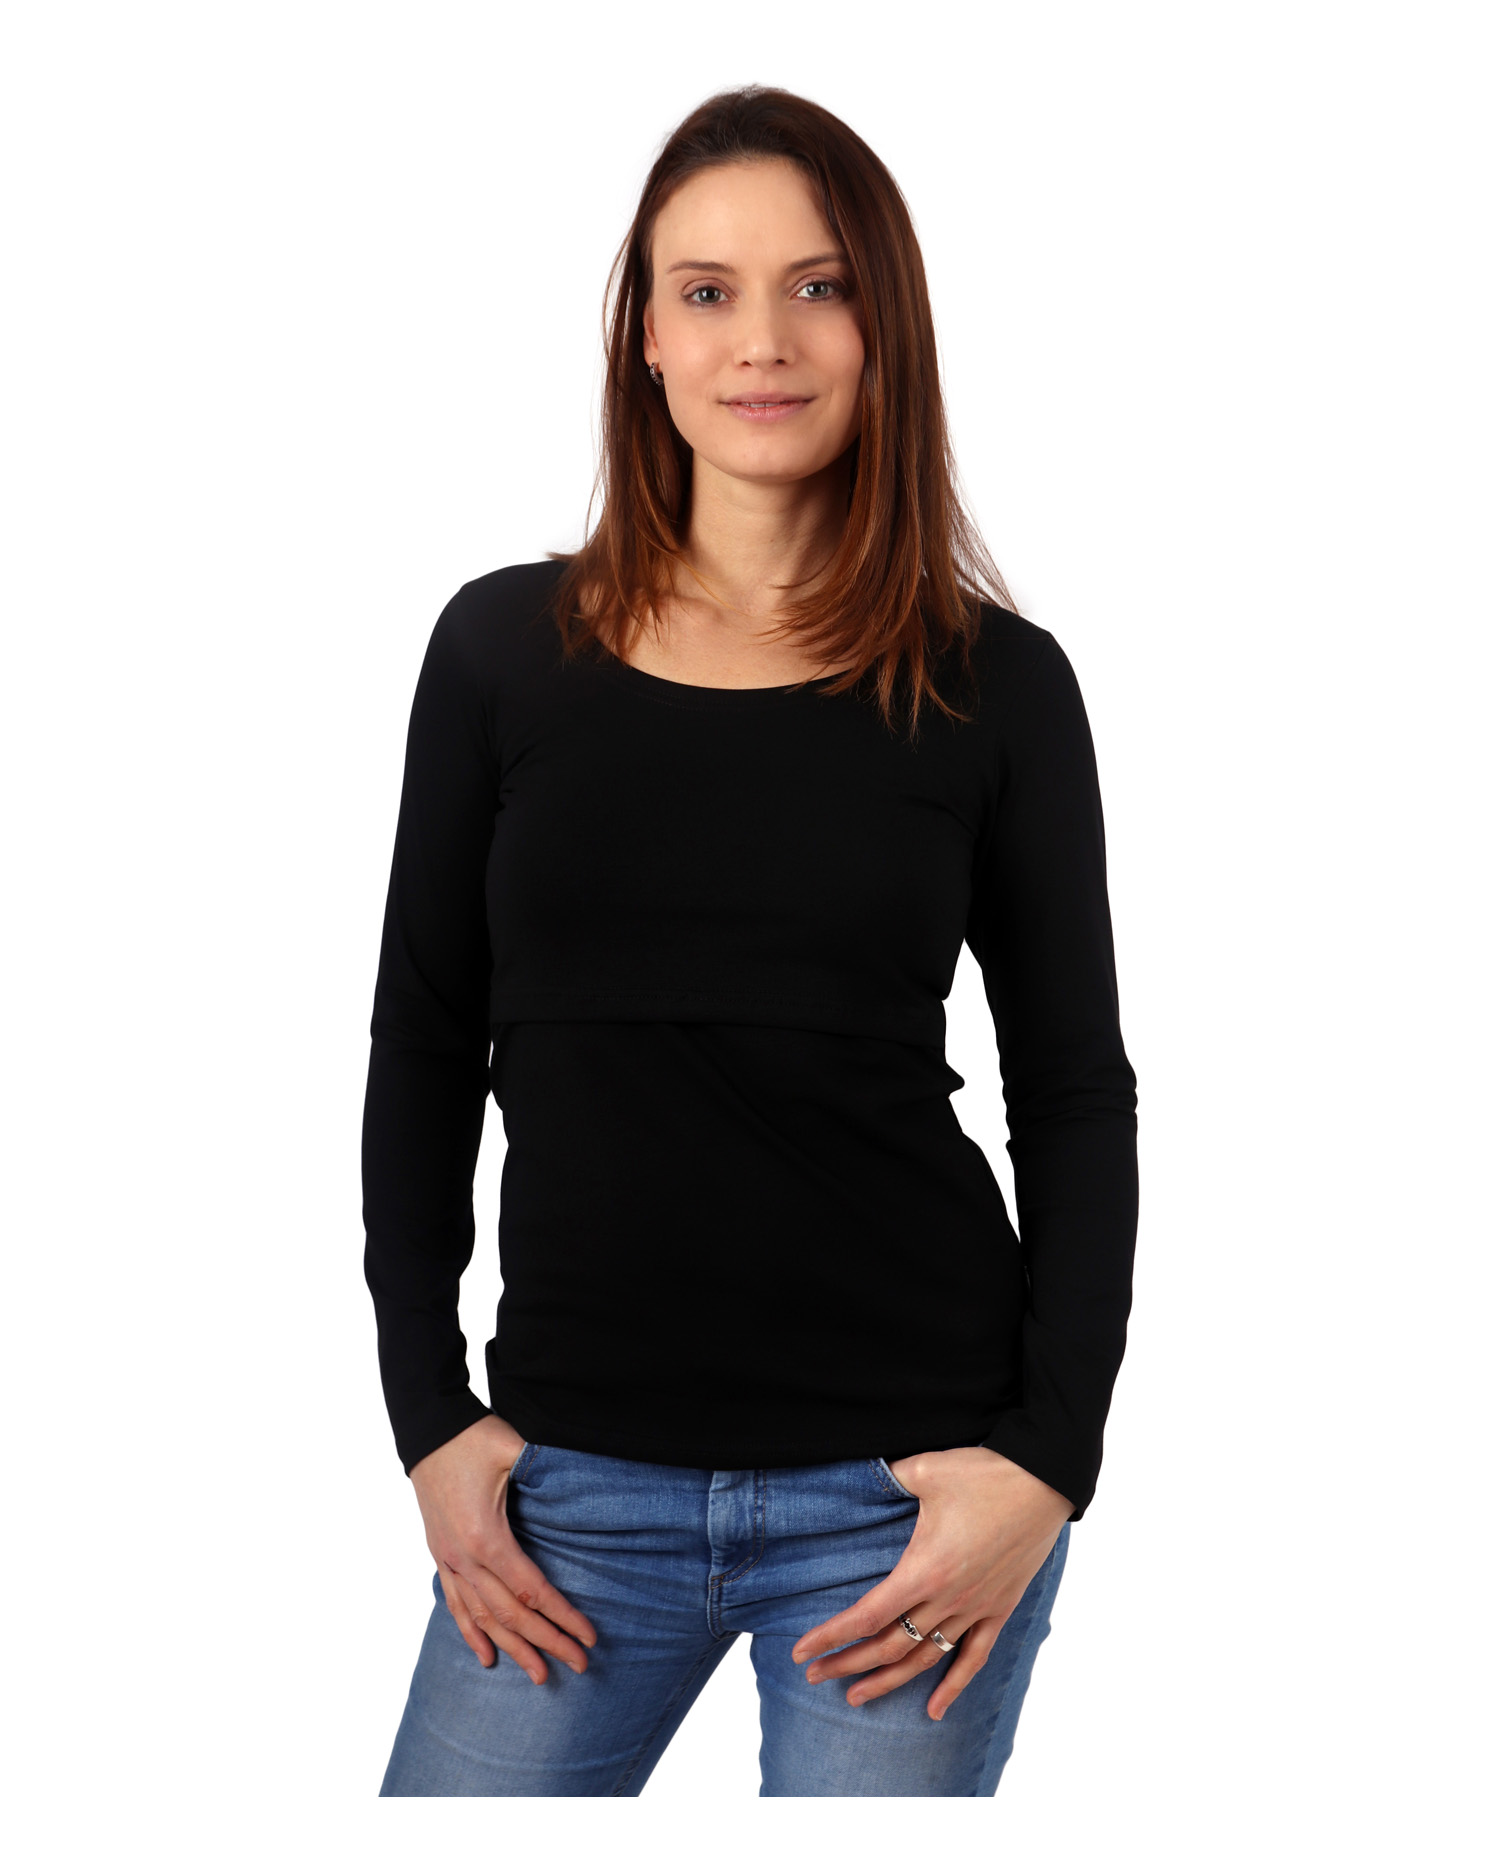 Breast-feeding T-shirt Katerina, long sleeves, BLACK